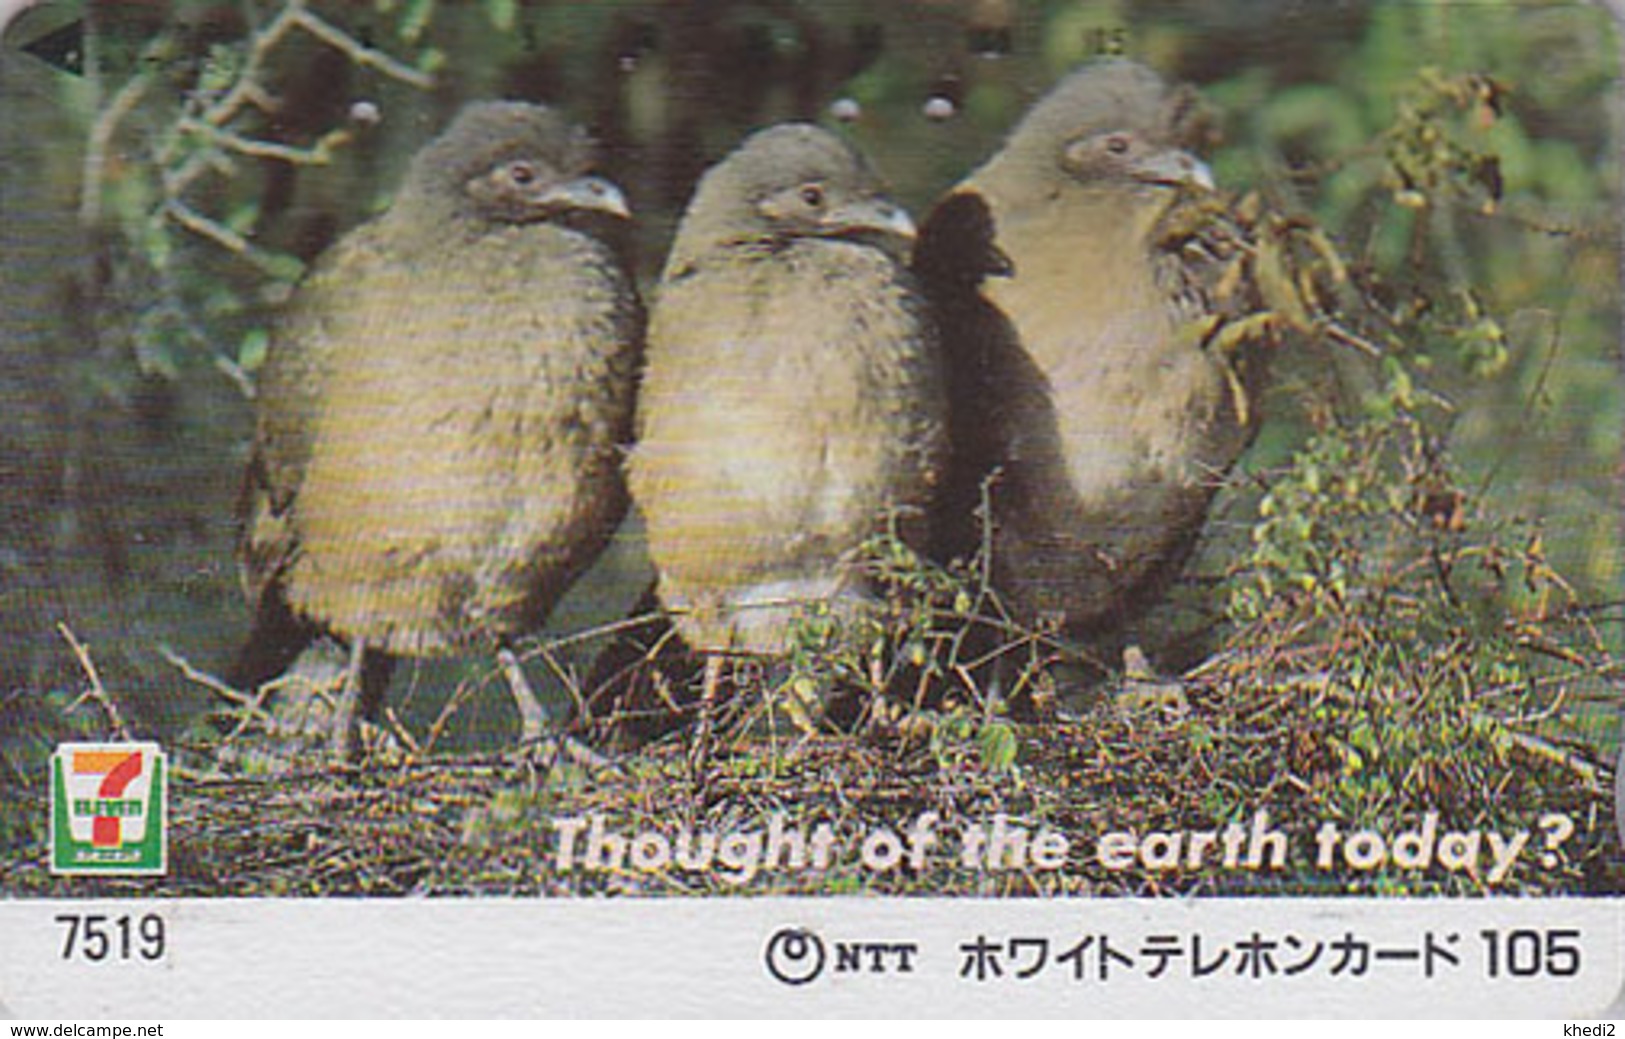 Télécarte JAPON / SERIE 7/11 - 7519 TBE - THOUGHT OF THE EARTH TODAY - ANIMAL - OISEAU - BIRD JAPAN Phonecard - Vogel BE - Sperlingsvögel & Singvögel